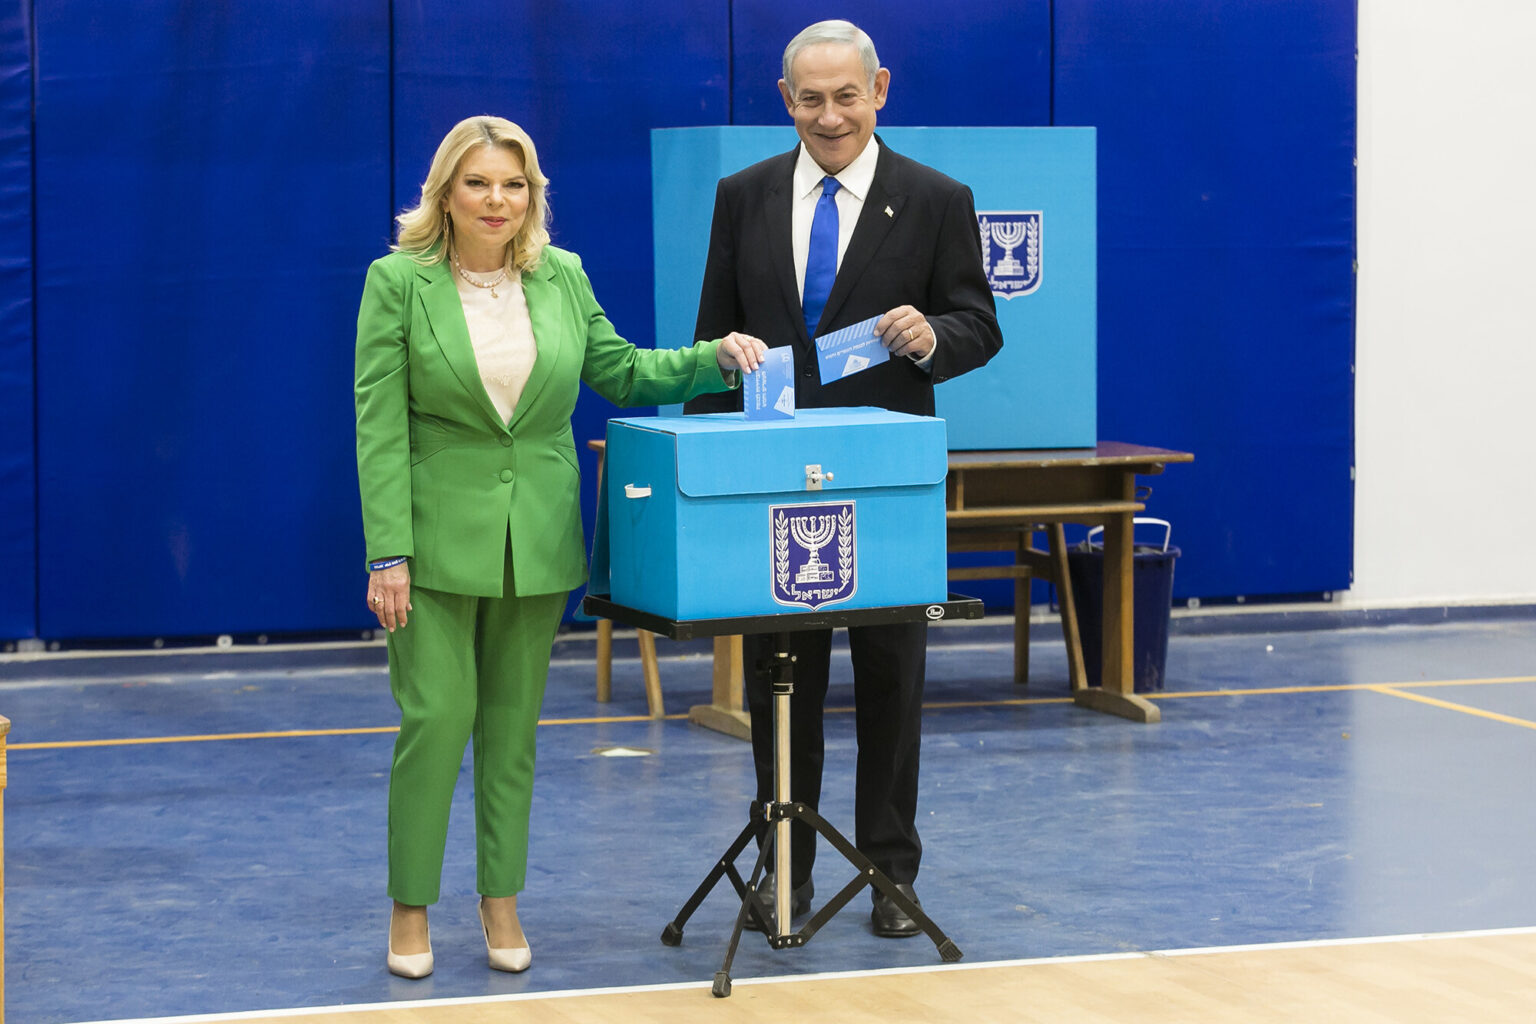 Netanyahu set for comeback, exit polls say